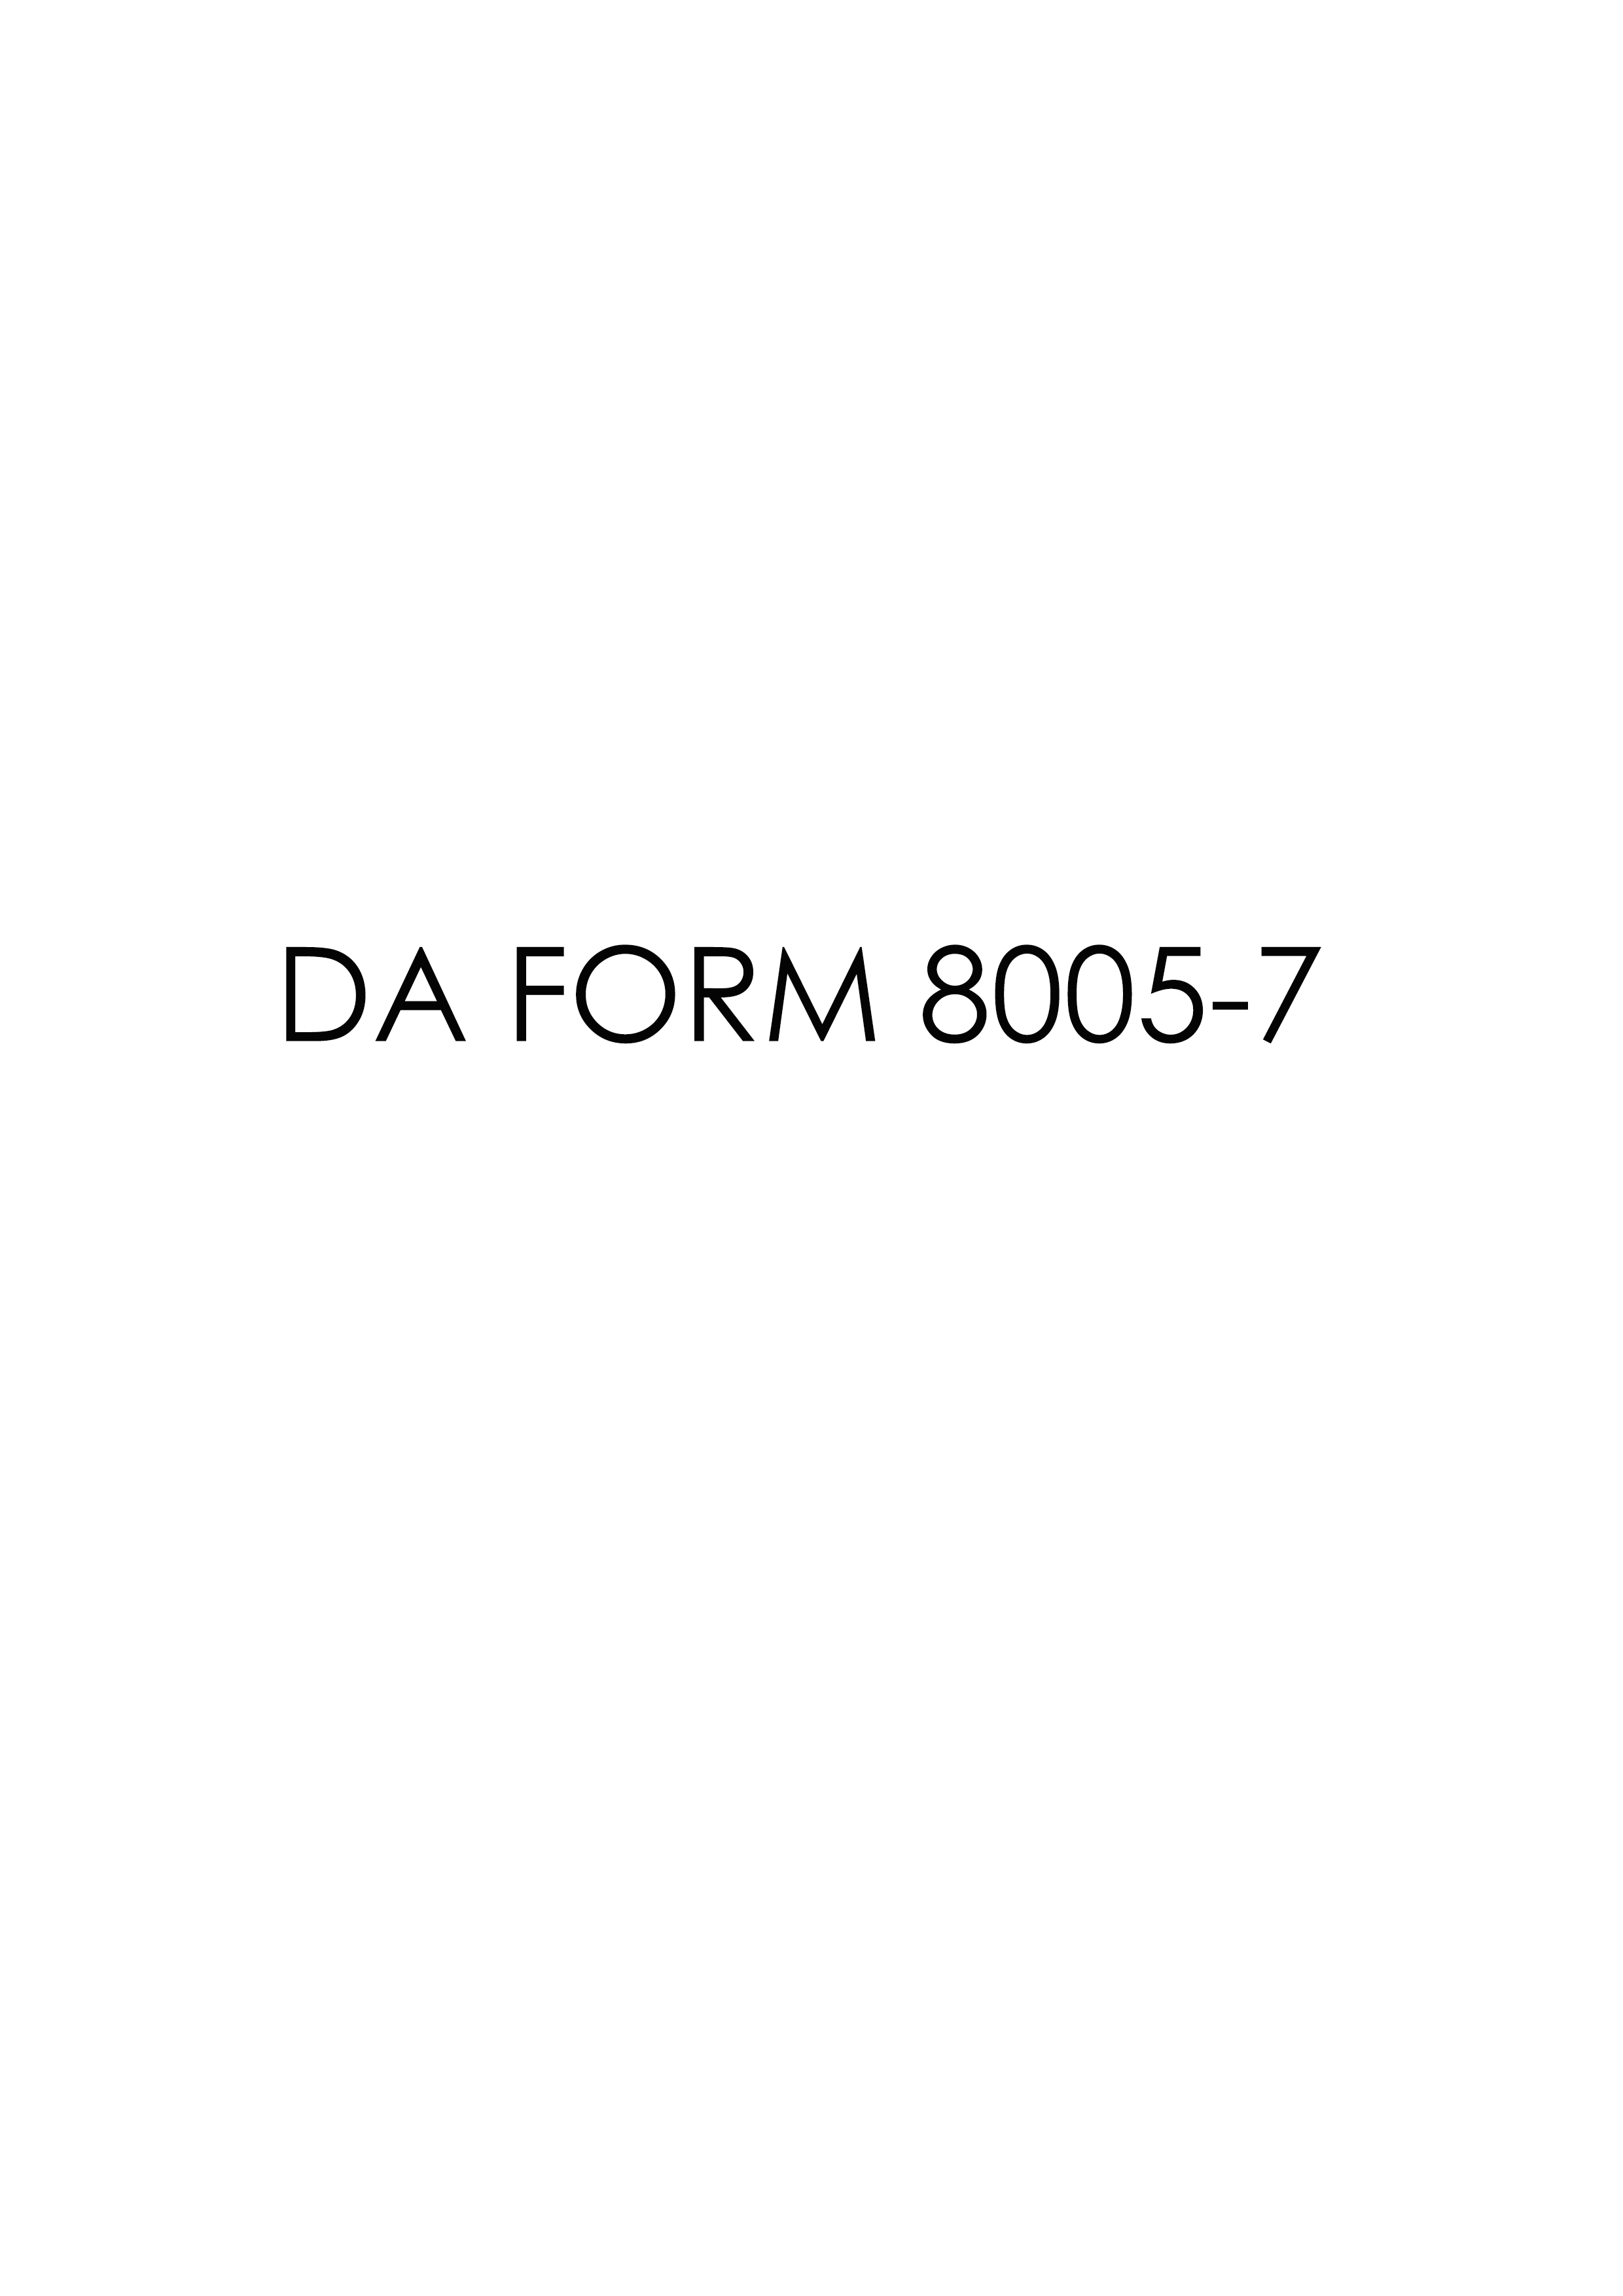 Download da form 8005-7